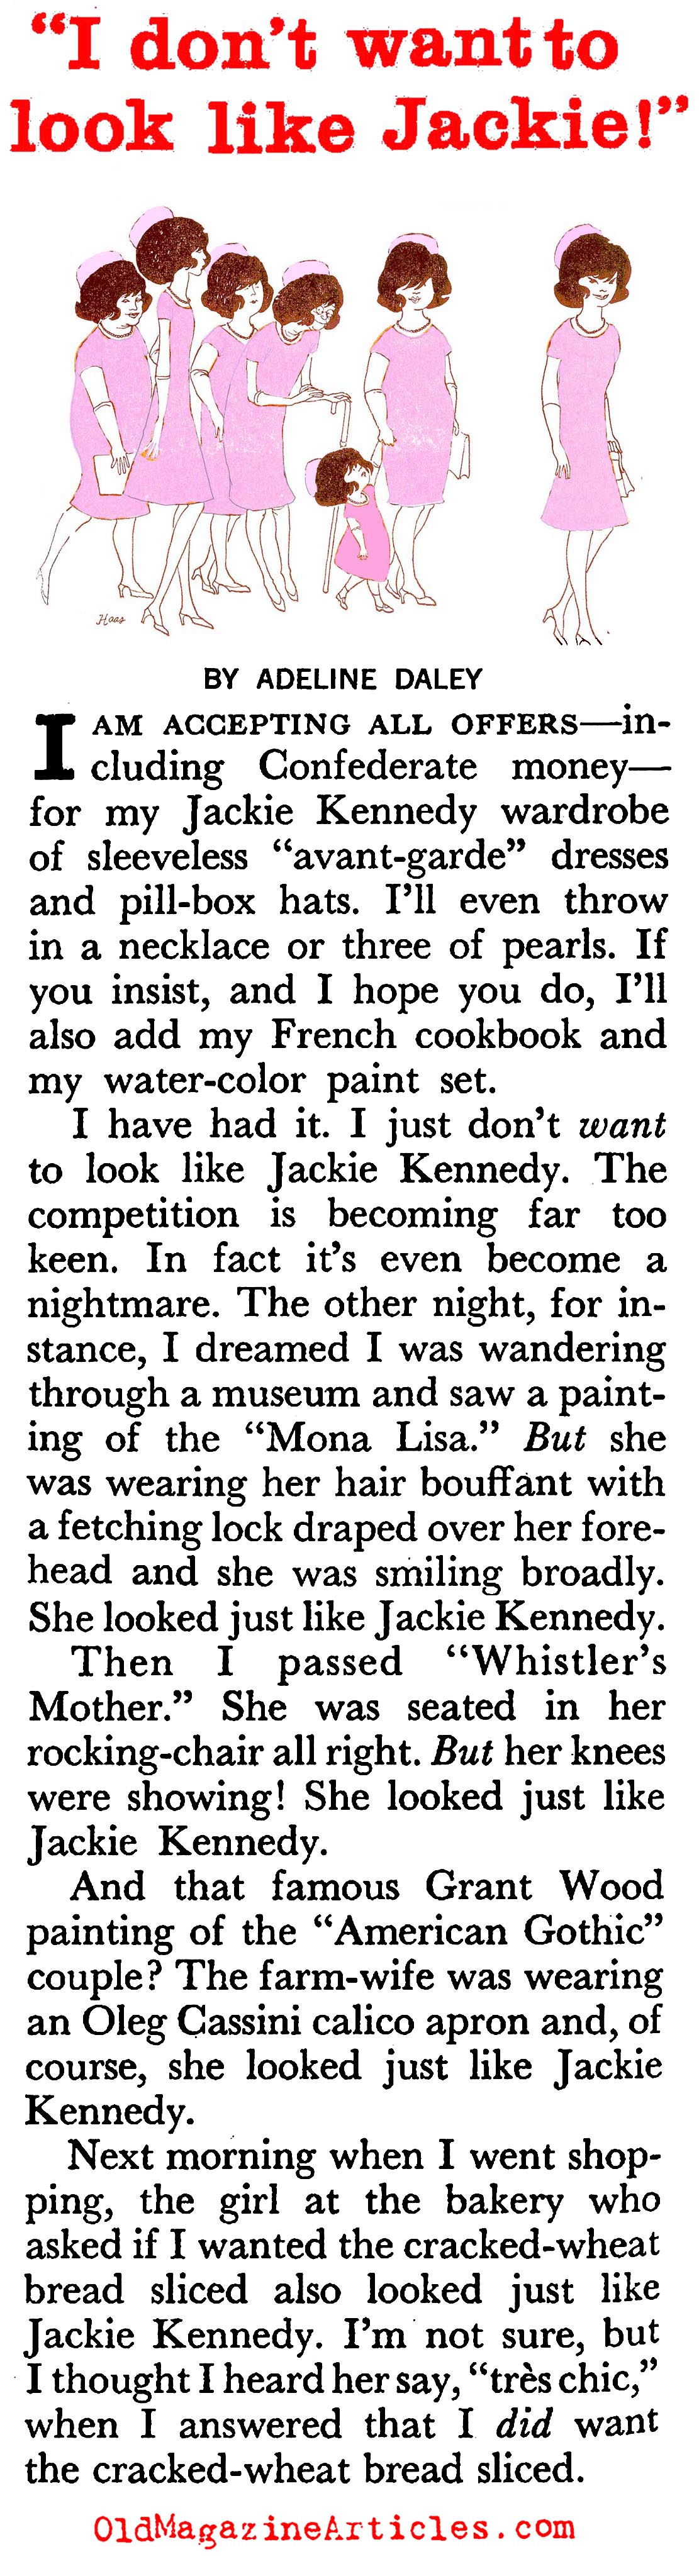 The Woman Who Didn't Want to Dress Like Jackie... (Coronet Magazine, 1961)